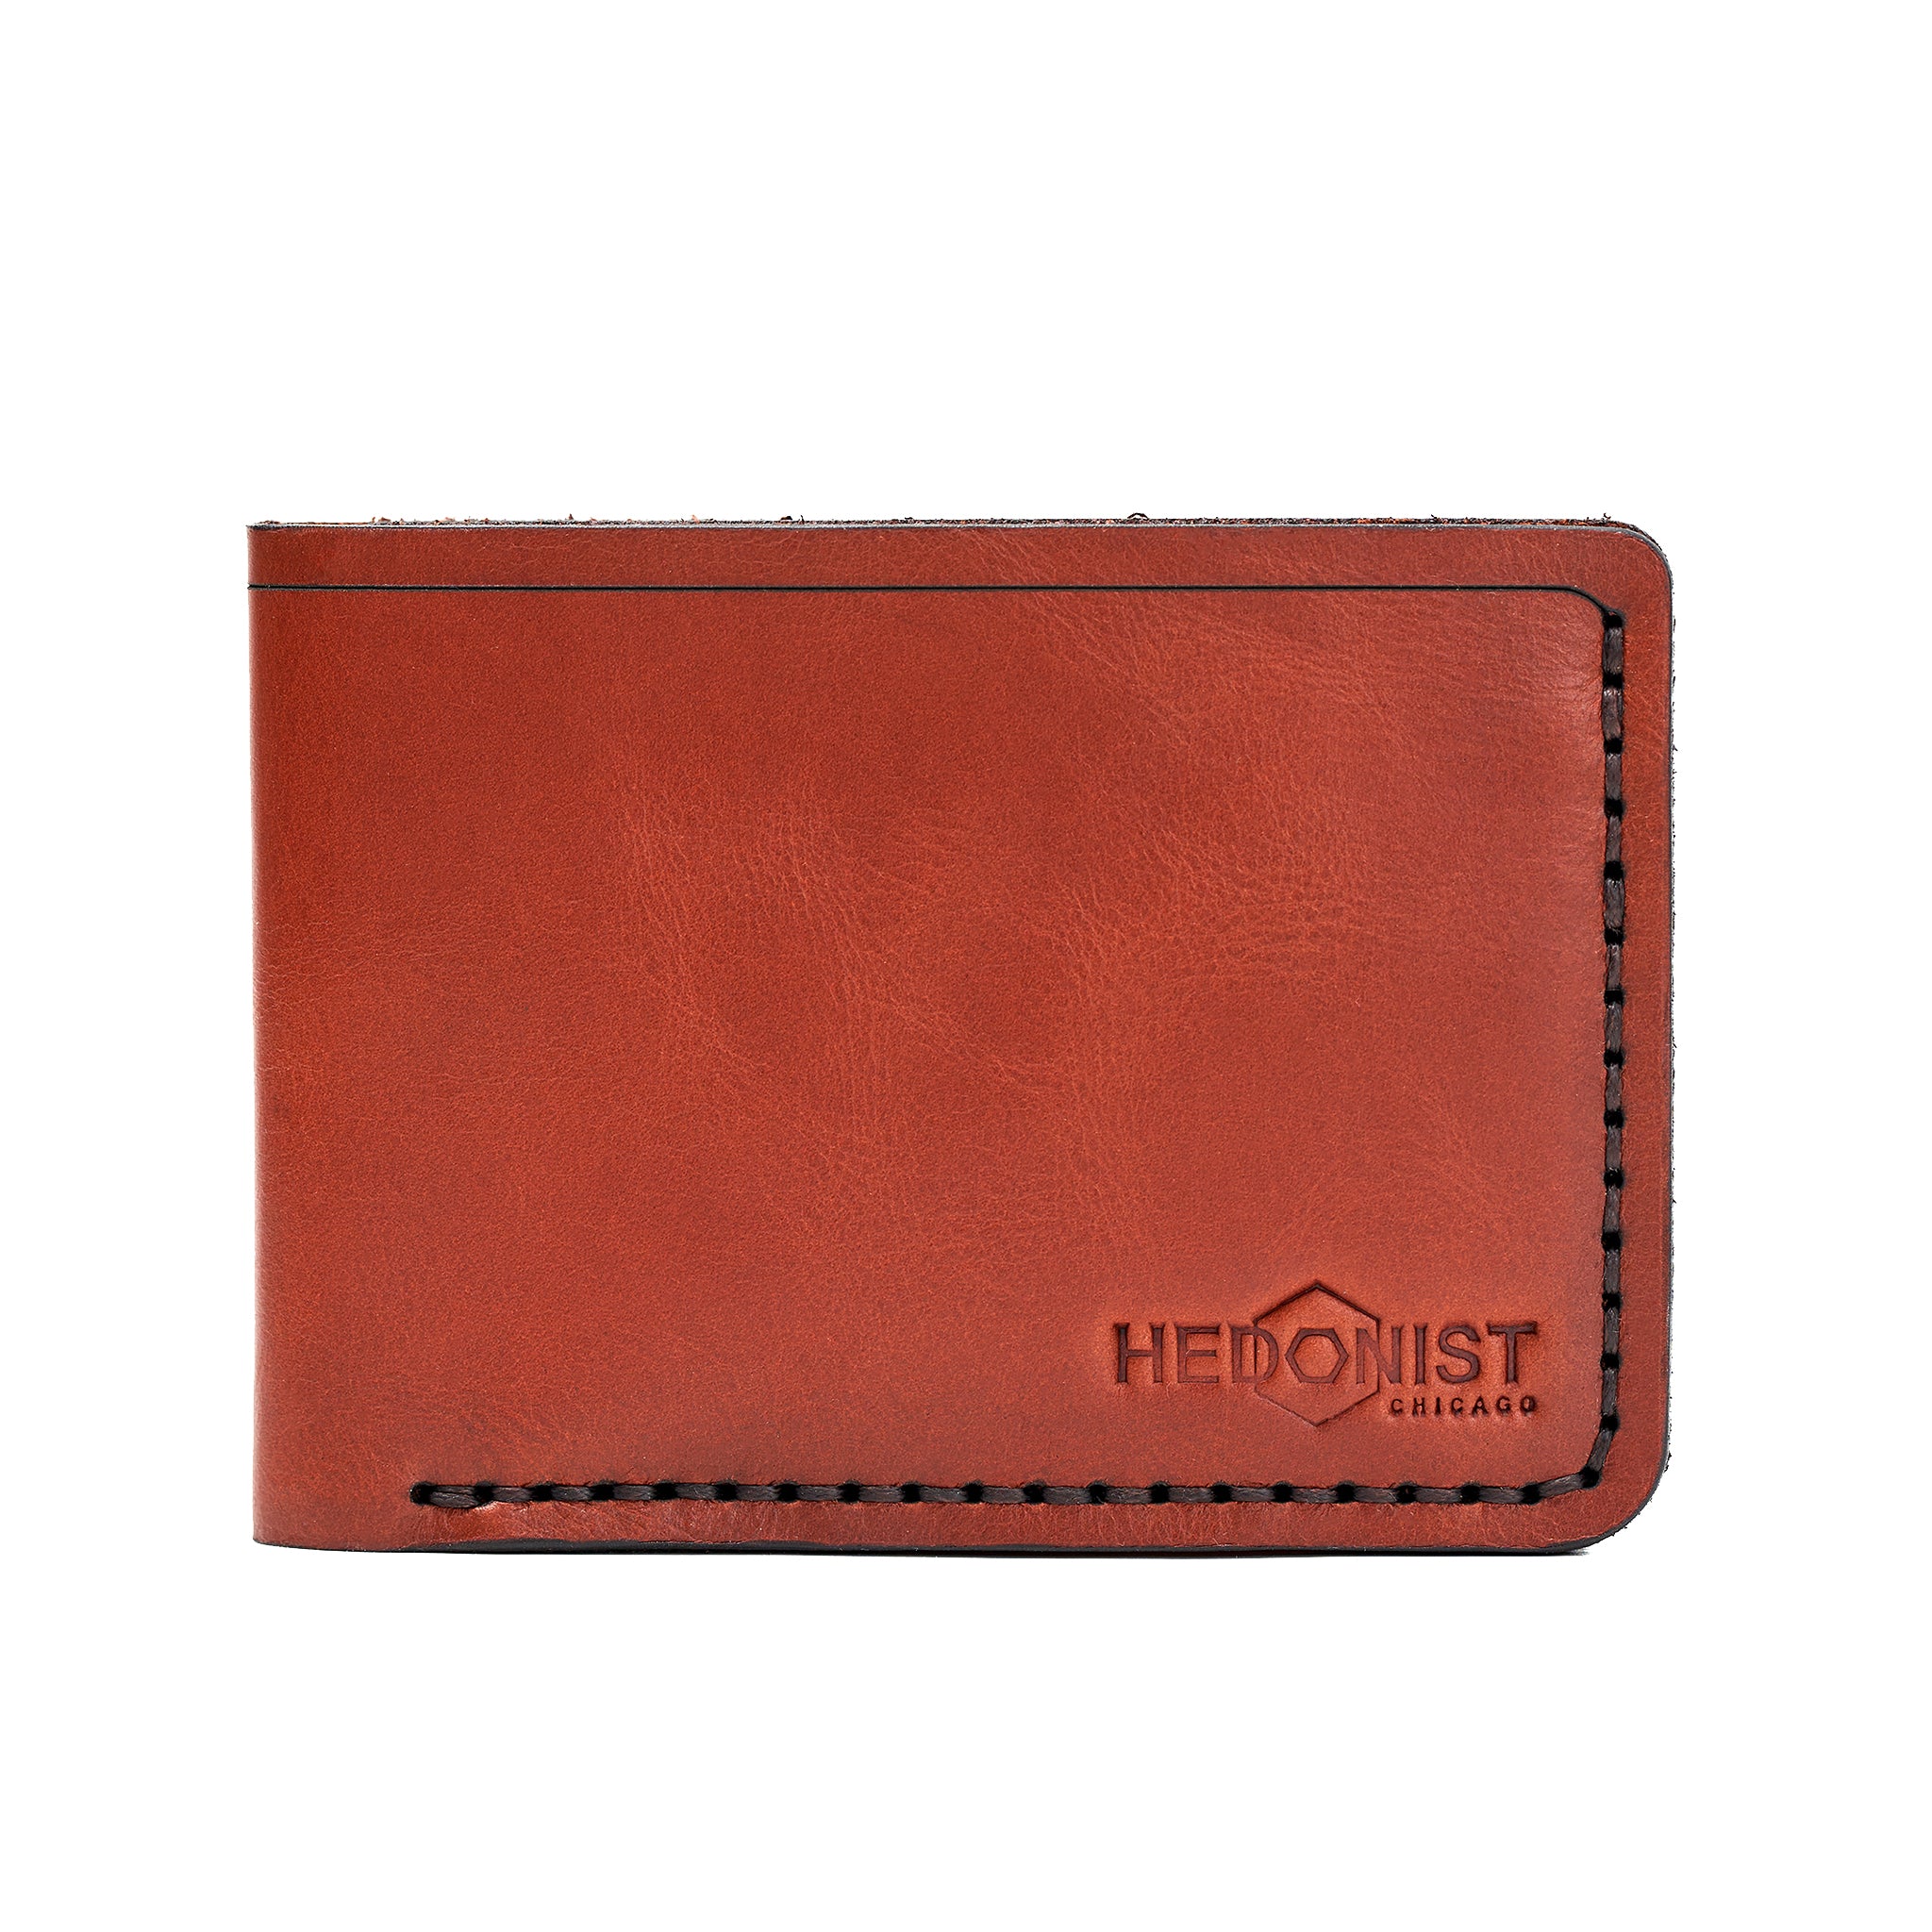 Handmade Men's Wallet 4 Card Slots Red Brick